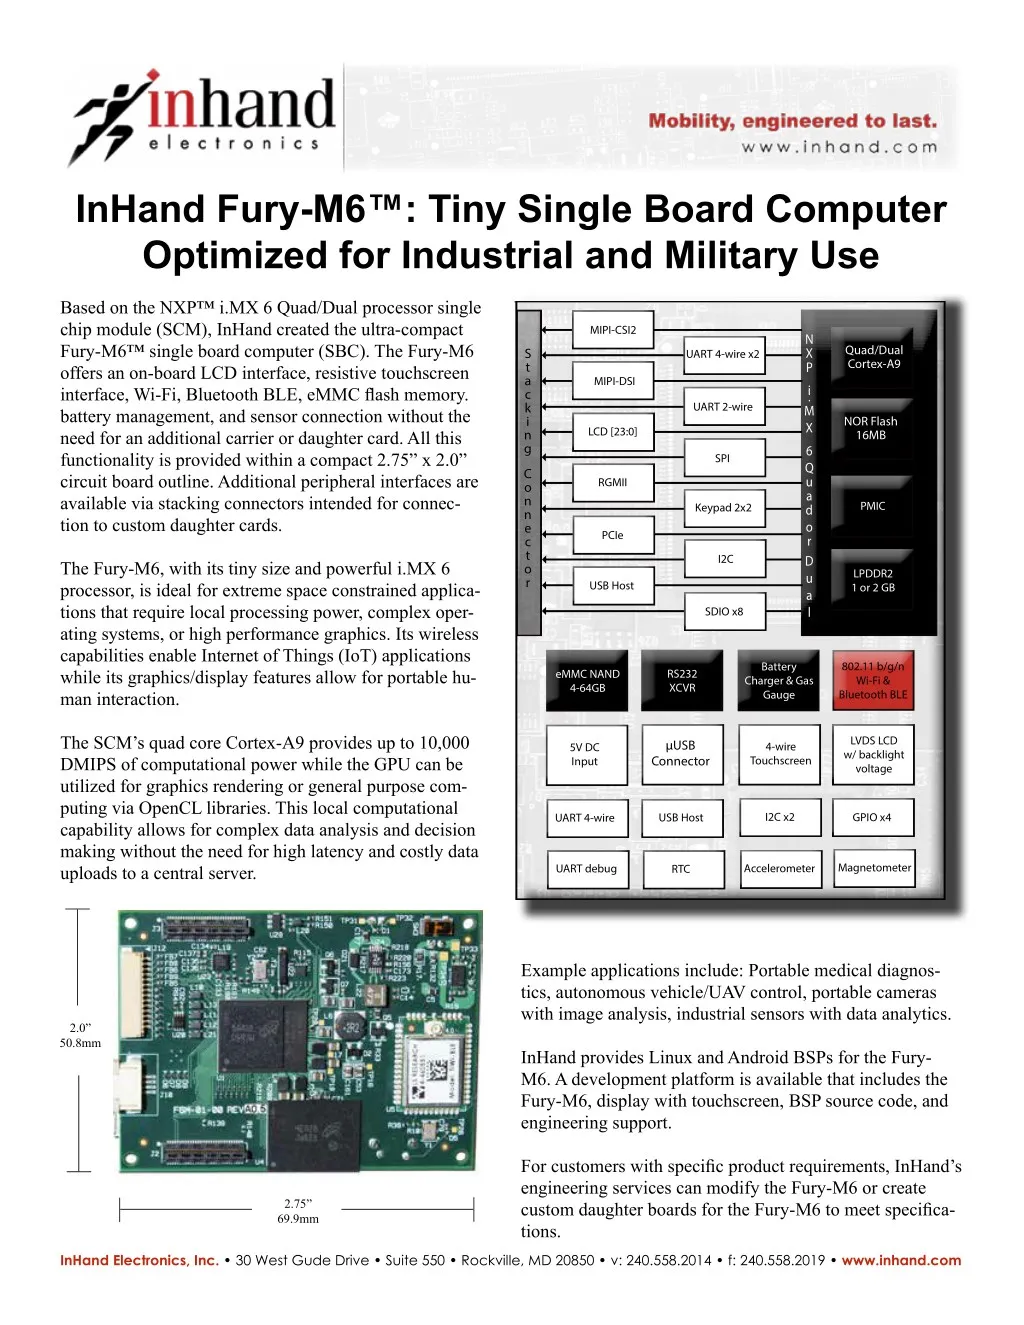 inhand fury m6 tiny single board computer